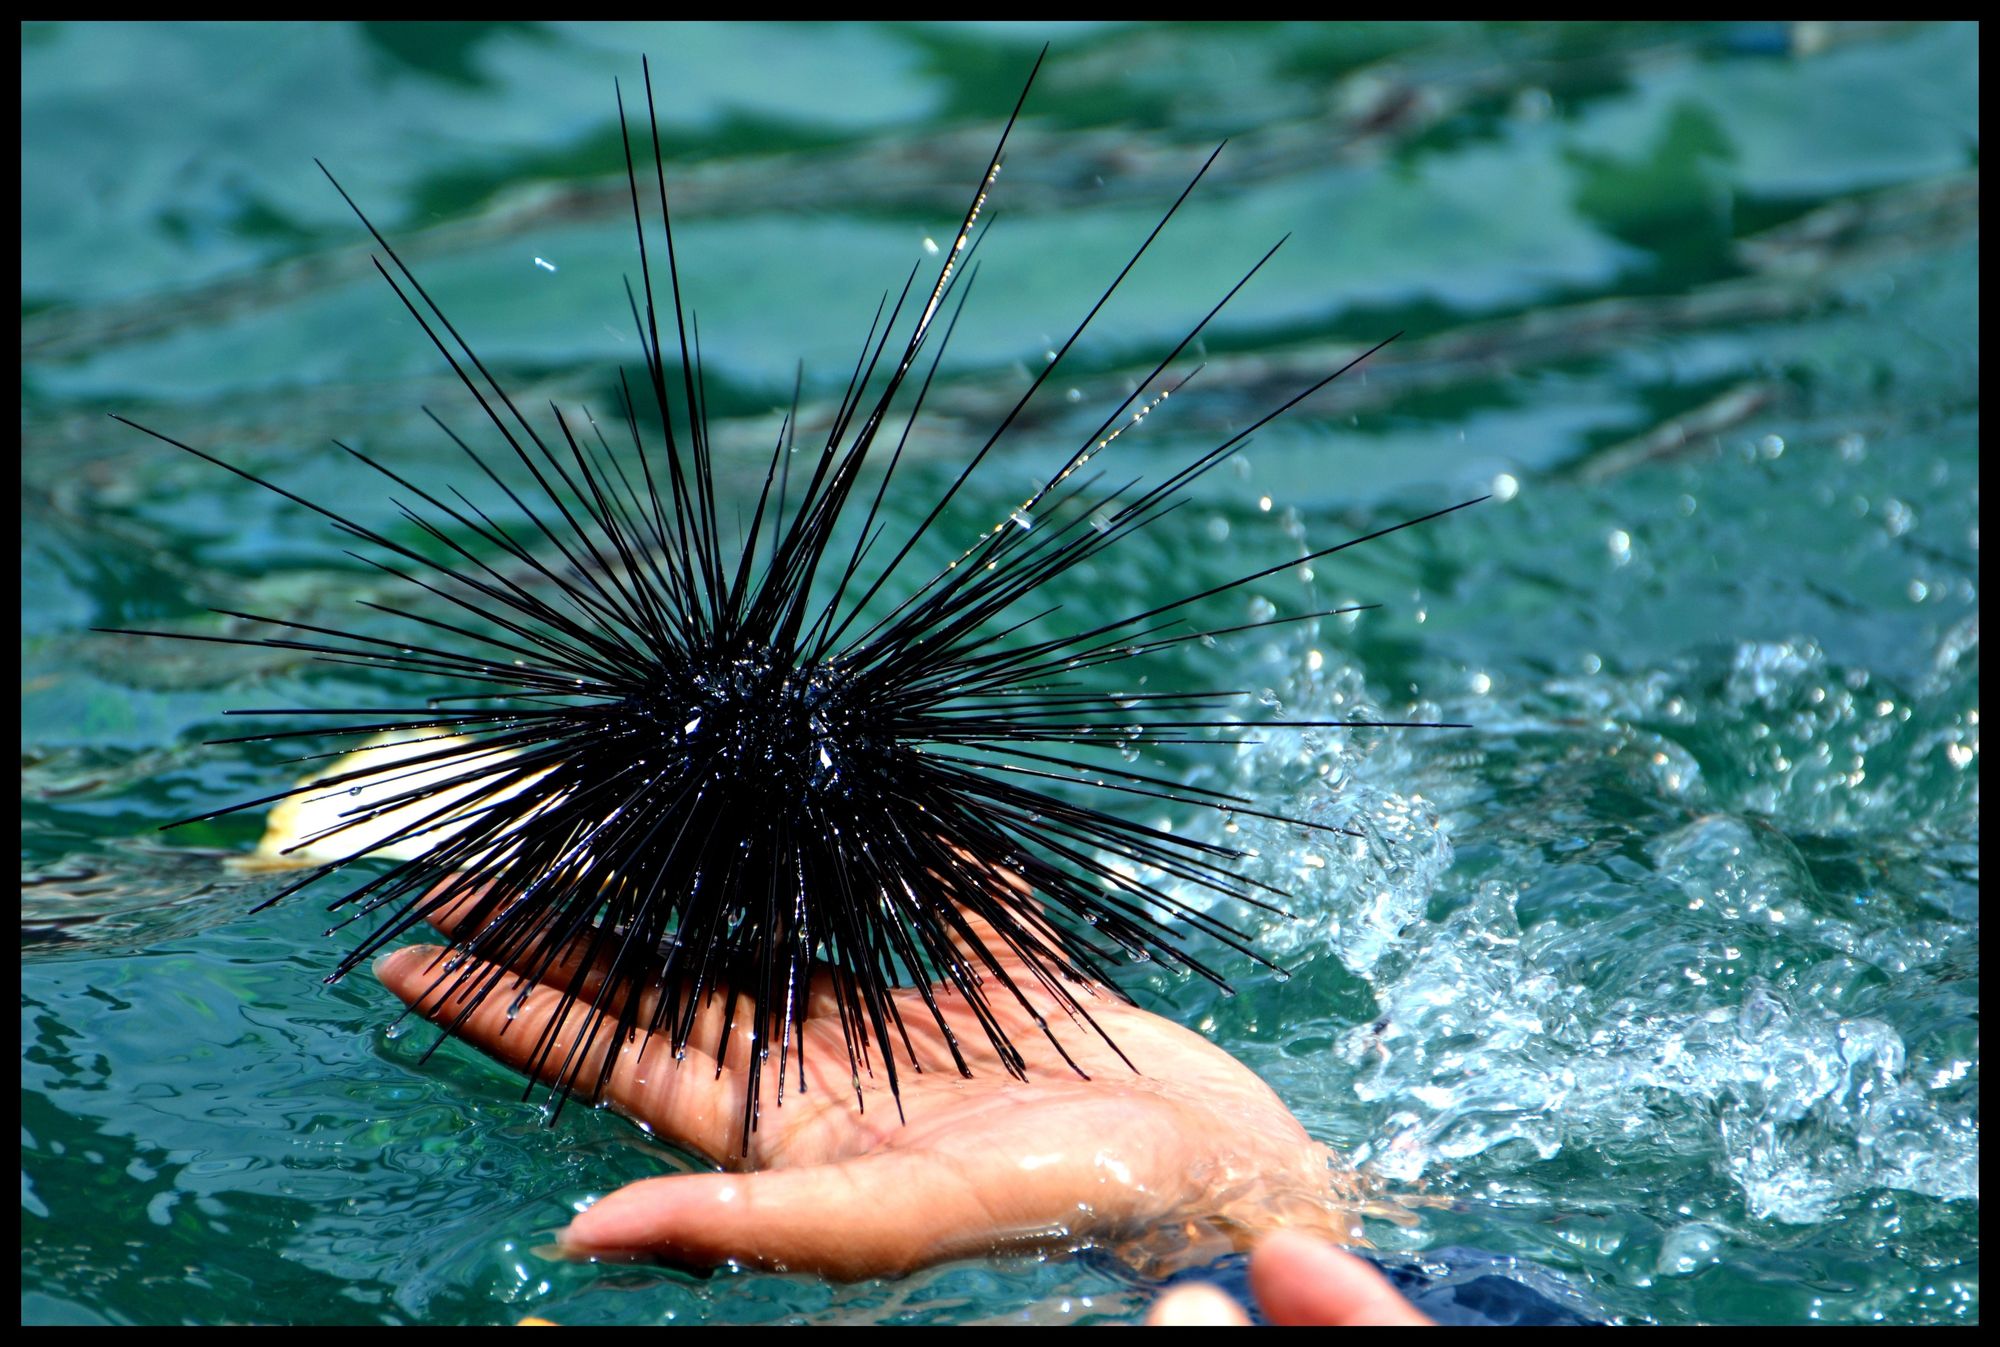 holding a sea urchin